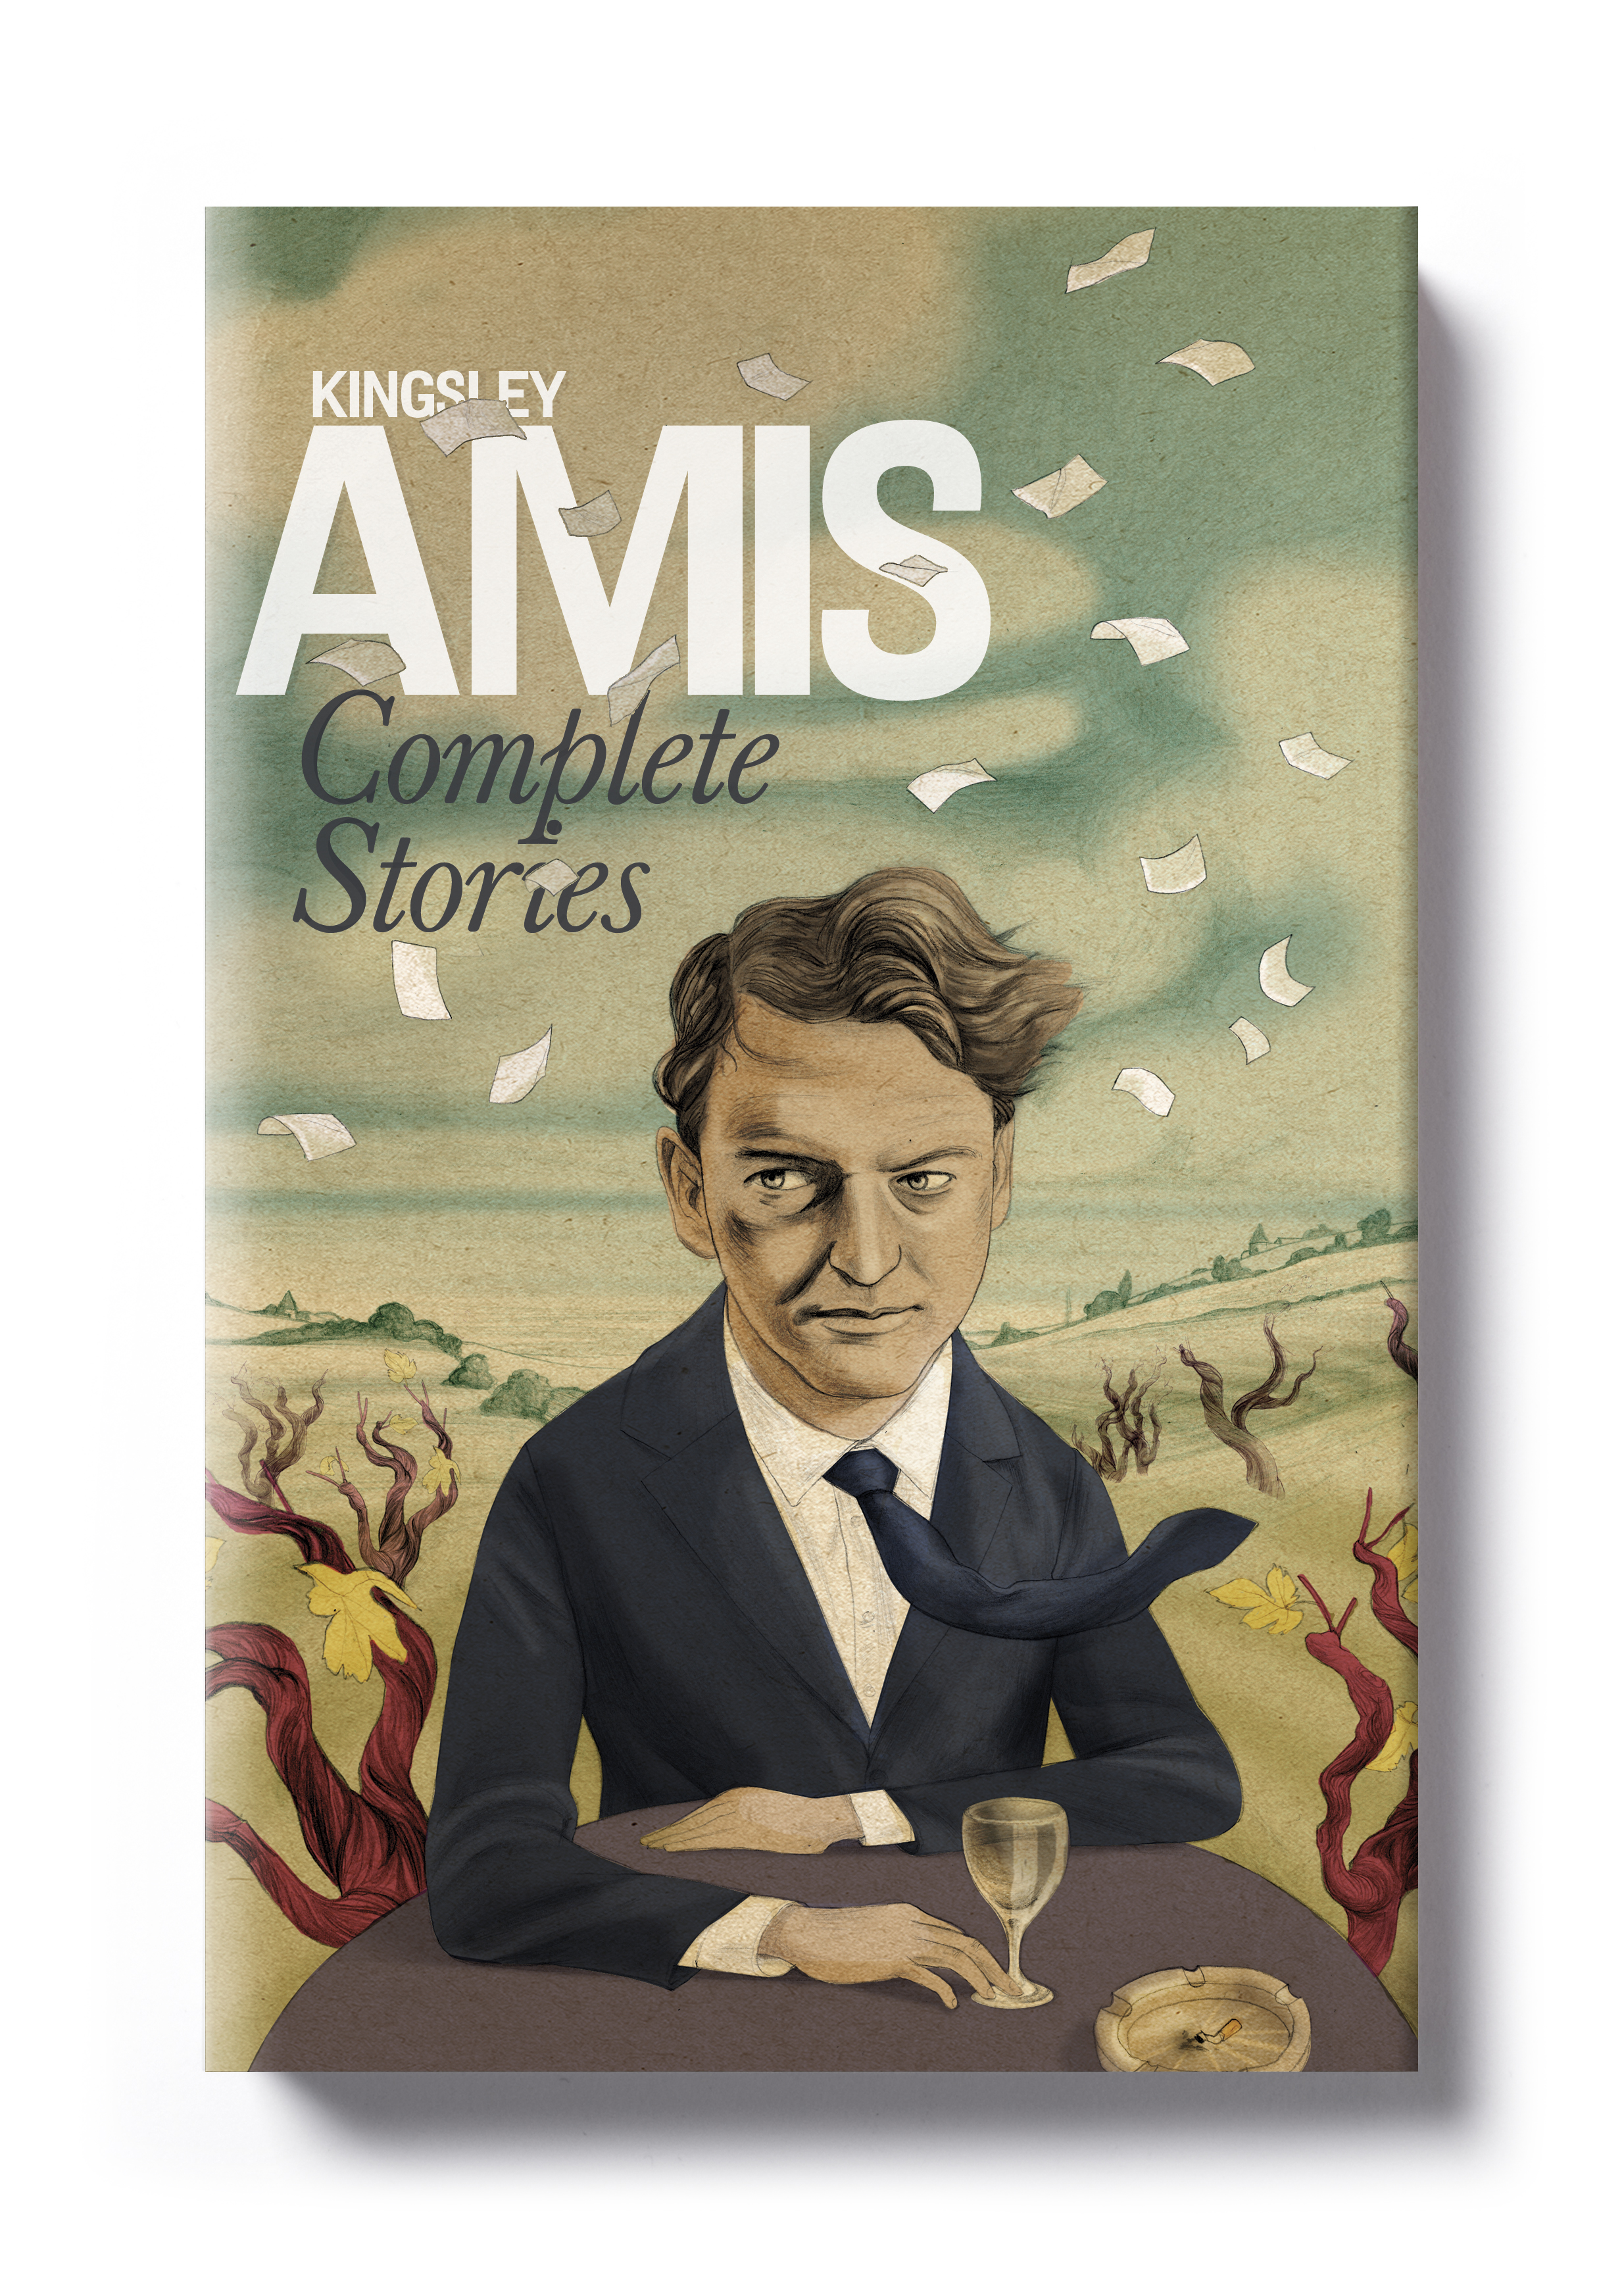  Complete Stories by Kingsley Amis - Design: Jim Stoddart Illustration: Jonathan Burton  